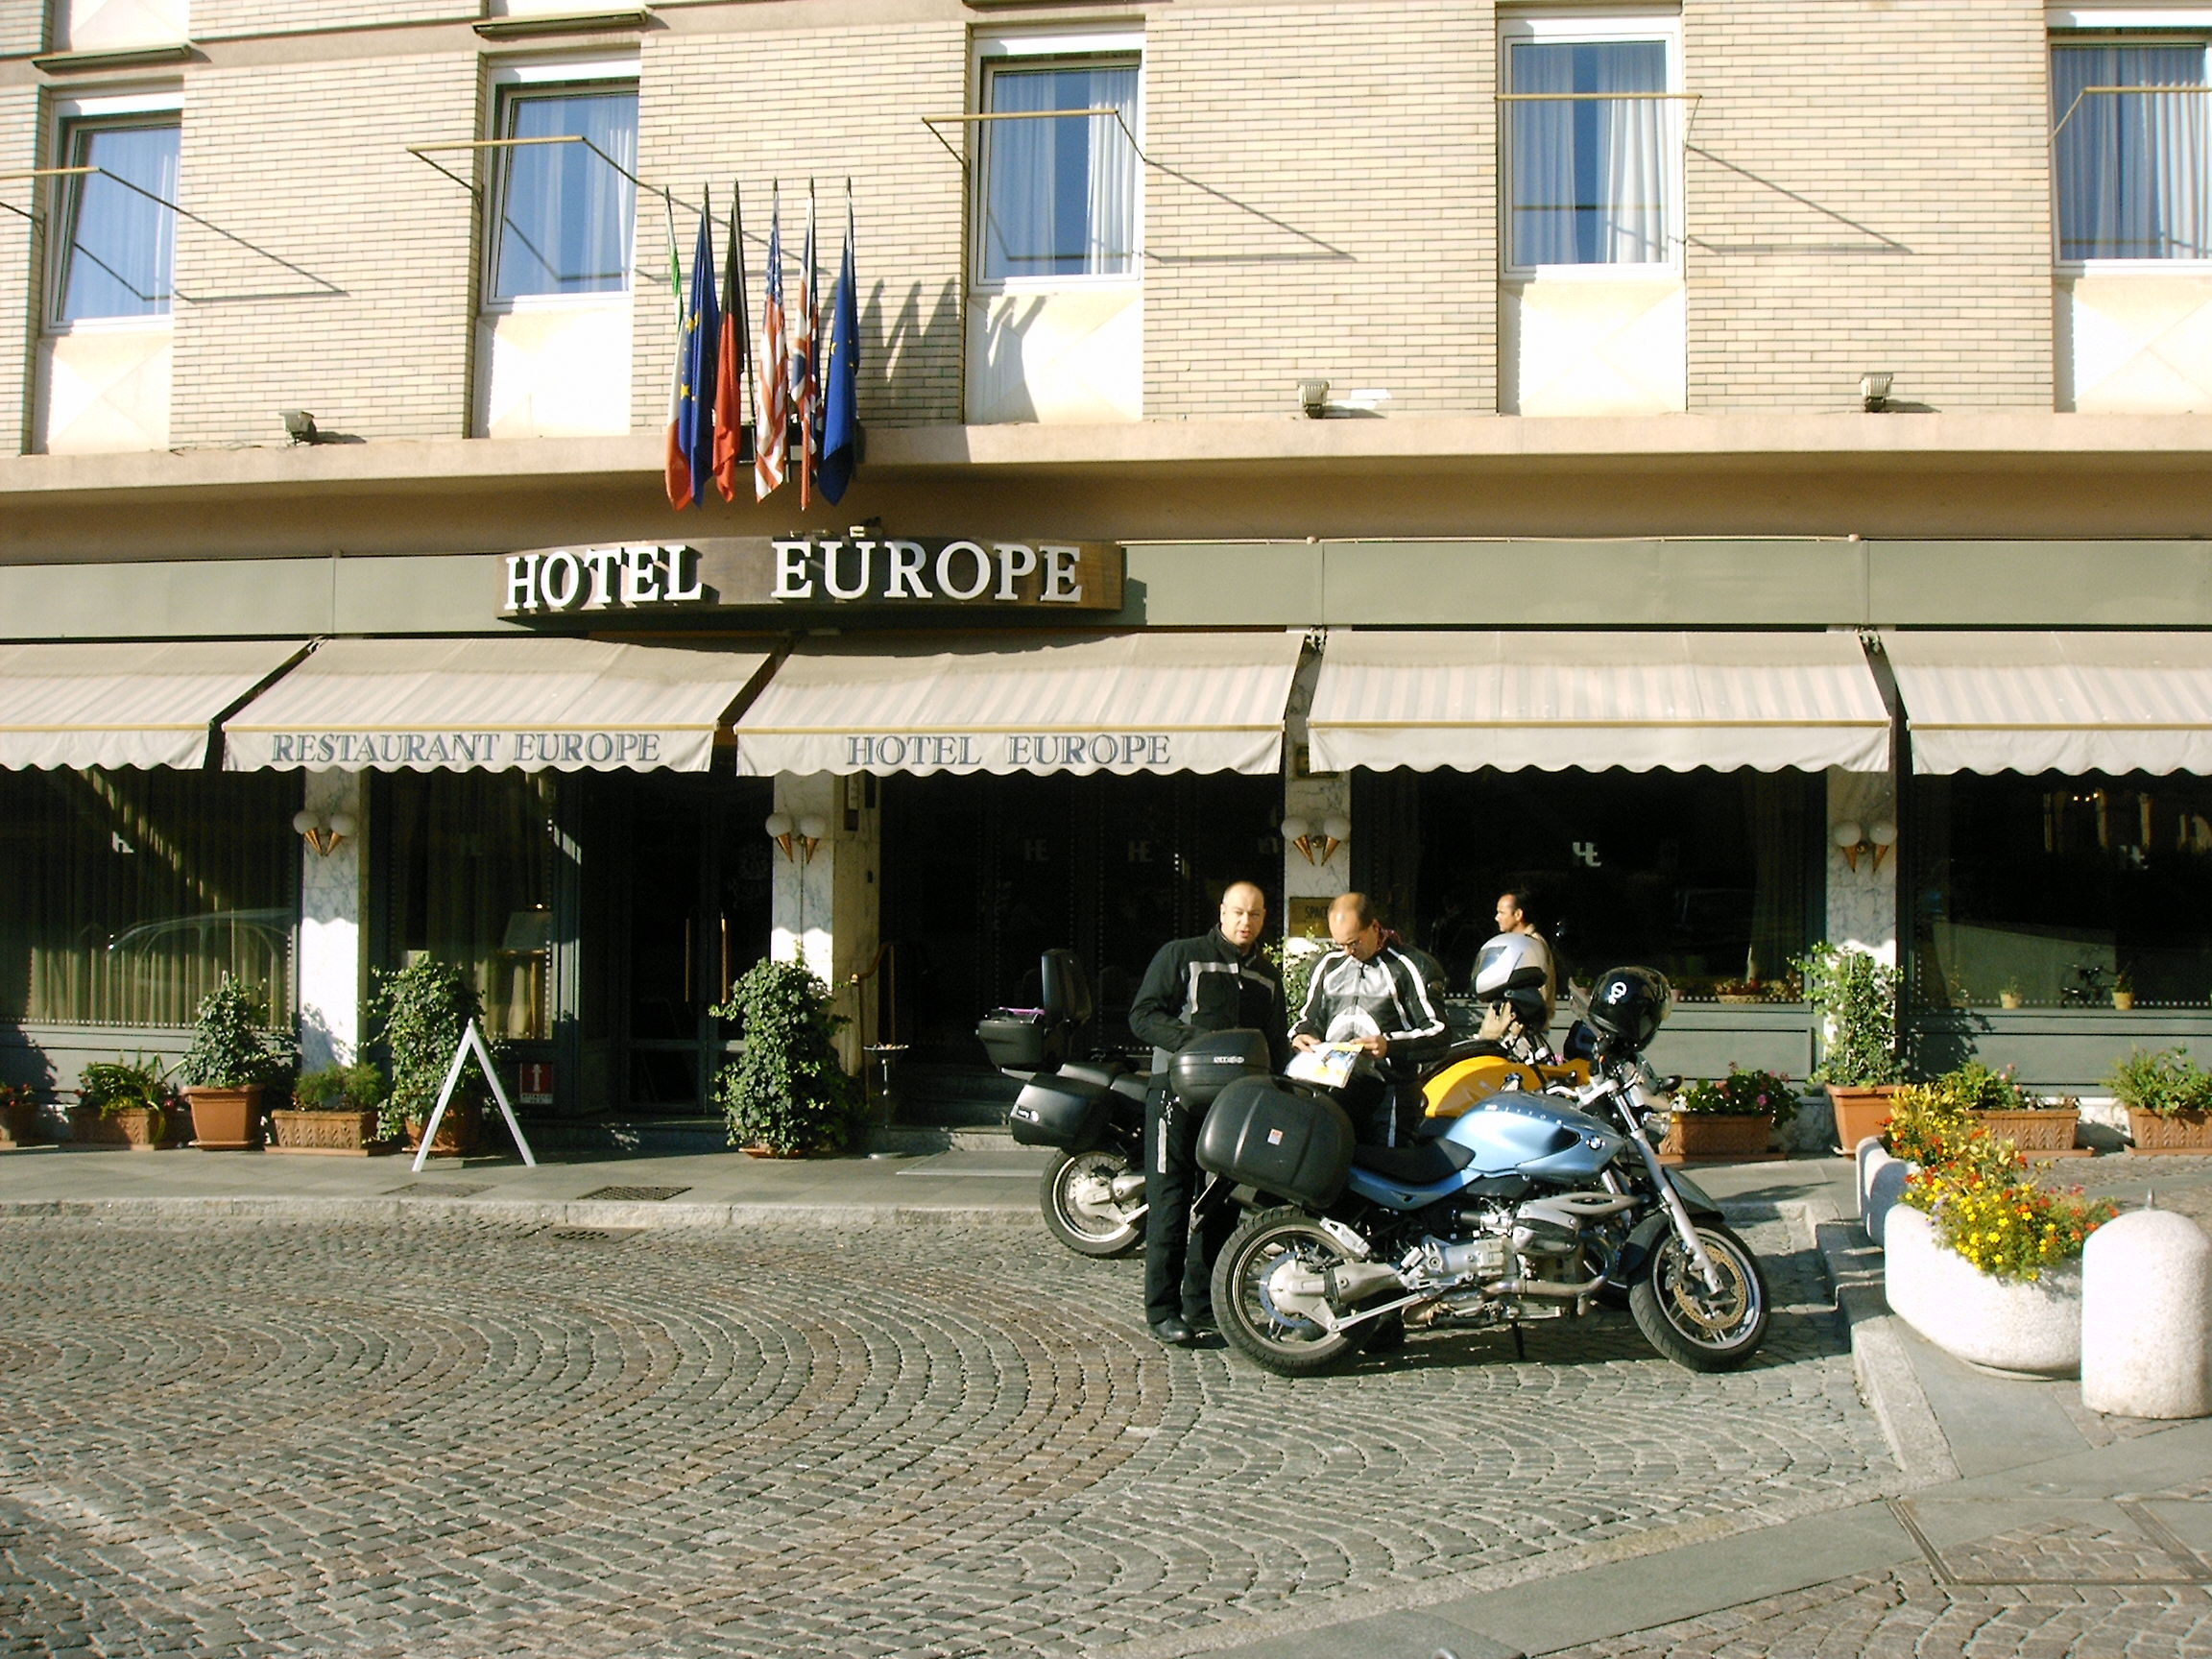 Hotel Europa in Aosta